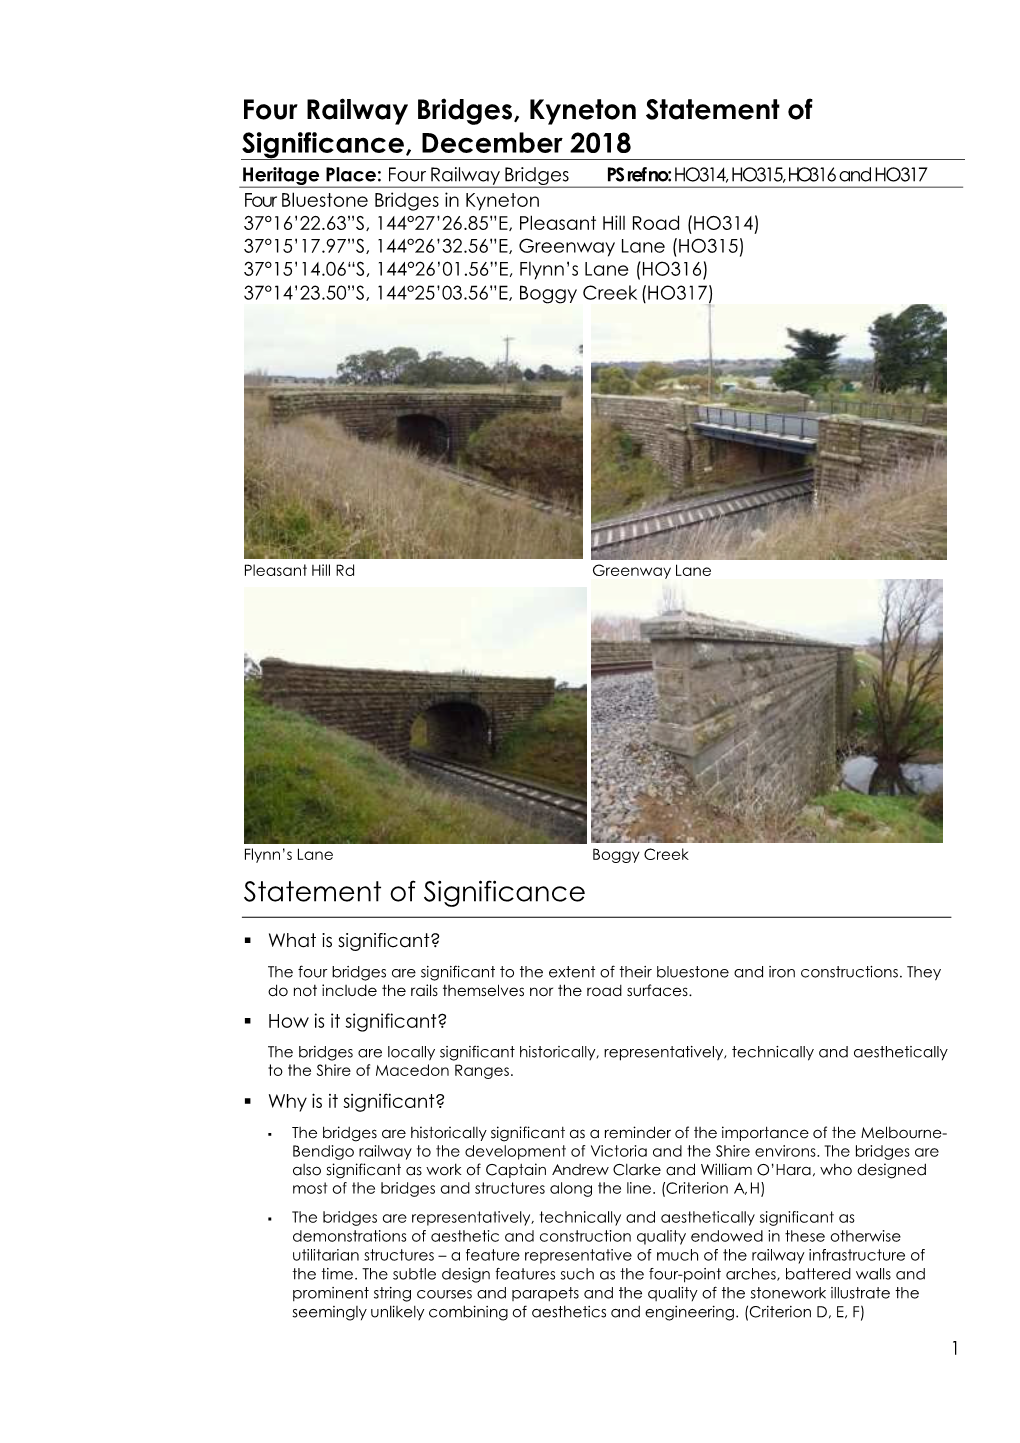 Four Railway Bridges, Kyneton Statement of Significance